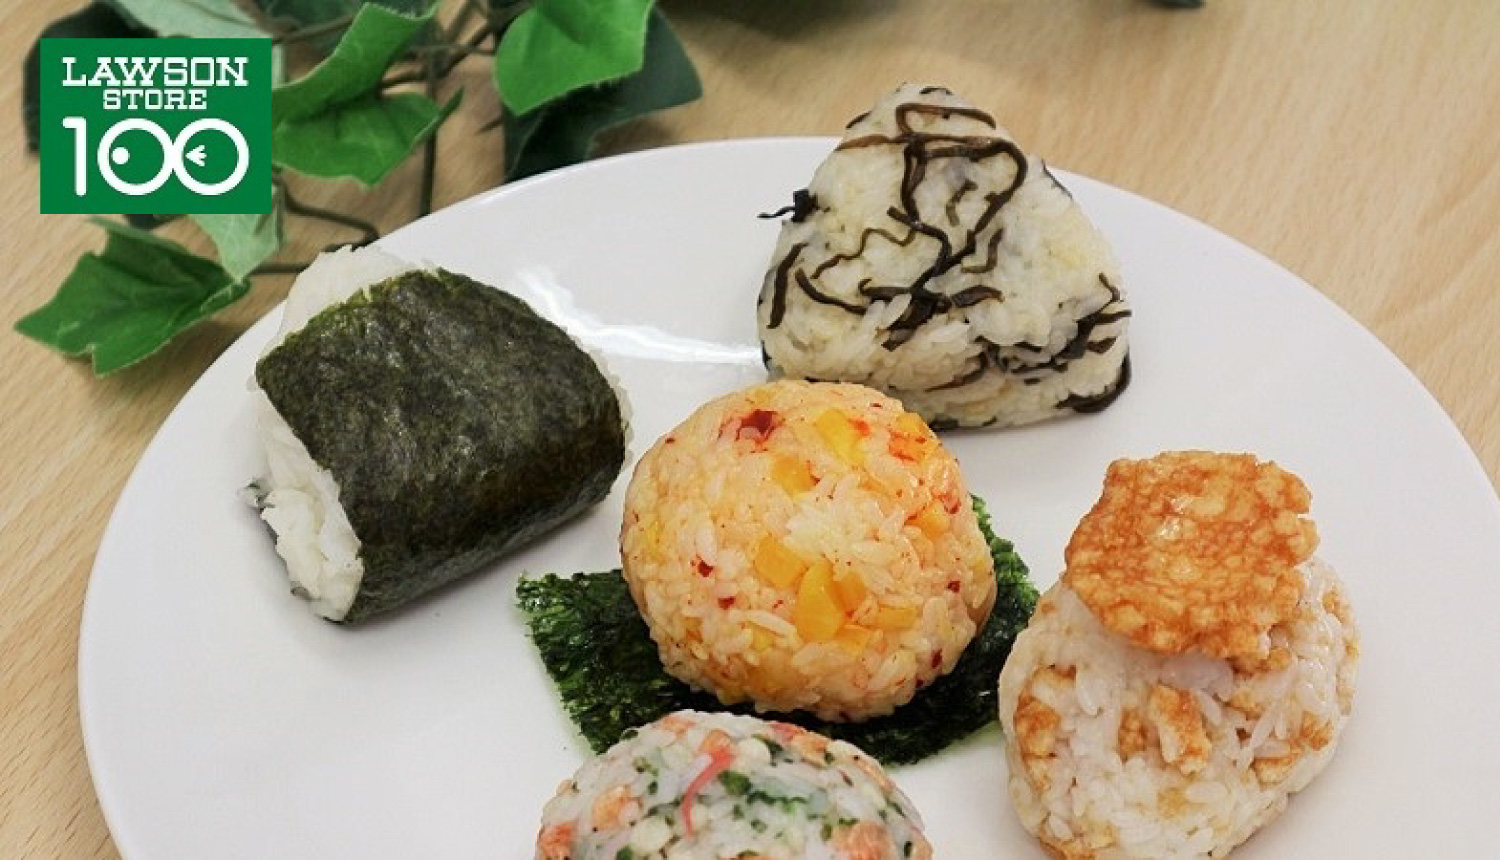 Japan's NewDays convenience stores launch onigiri rice balls